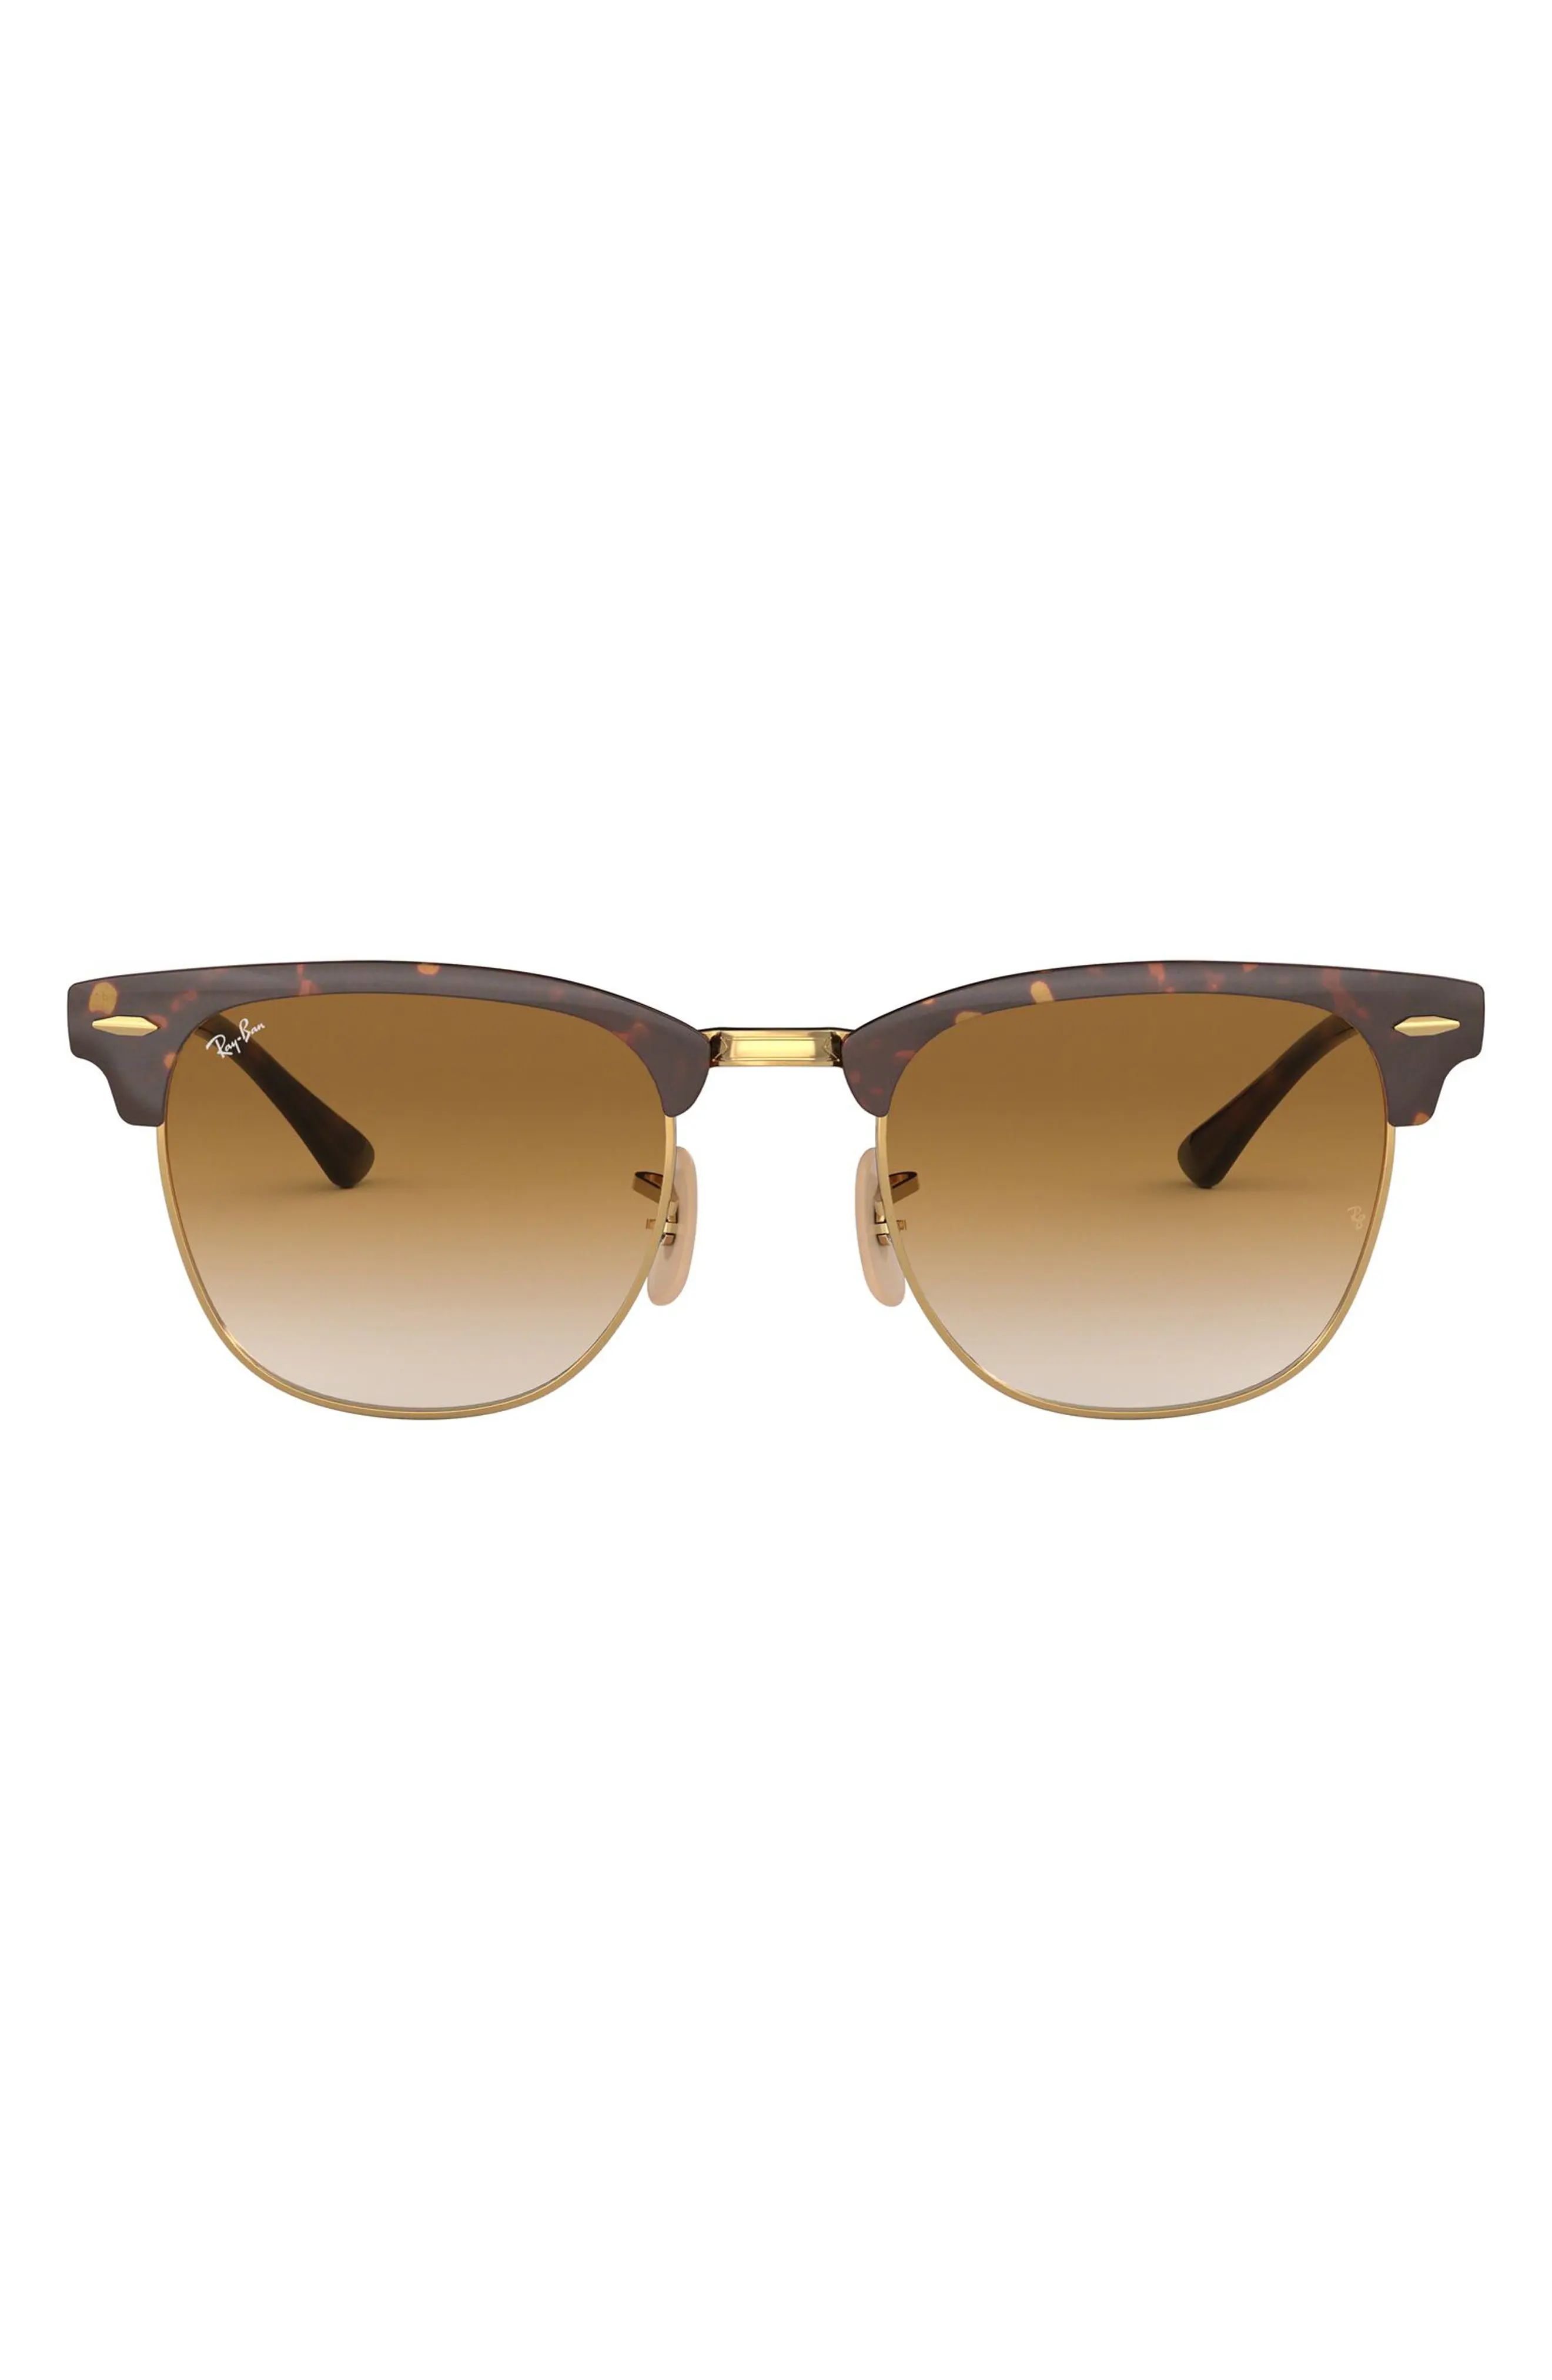 Women's Ray-Ban Clubmaster 51mm Sunglasses - Havana Gold | Nordstrom